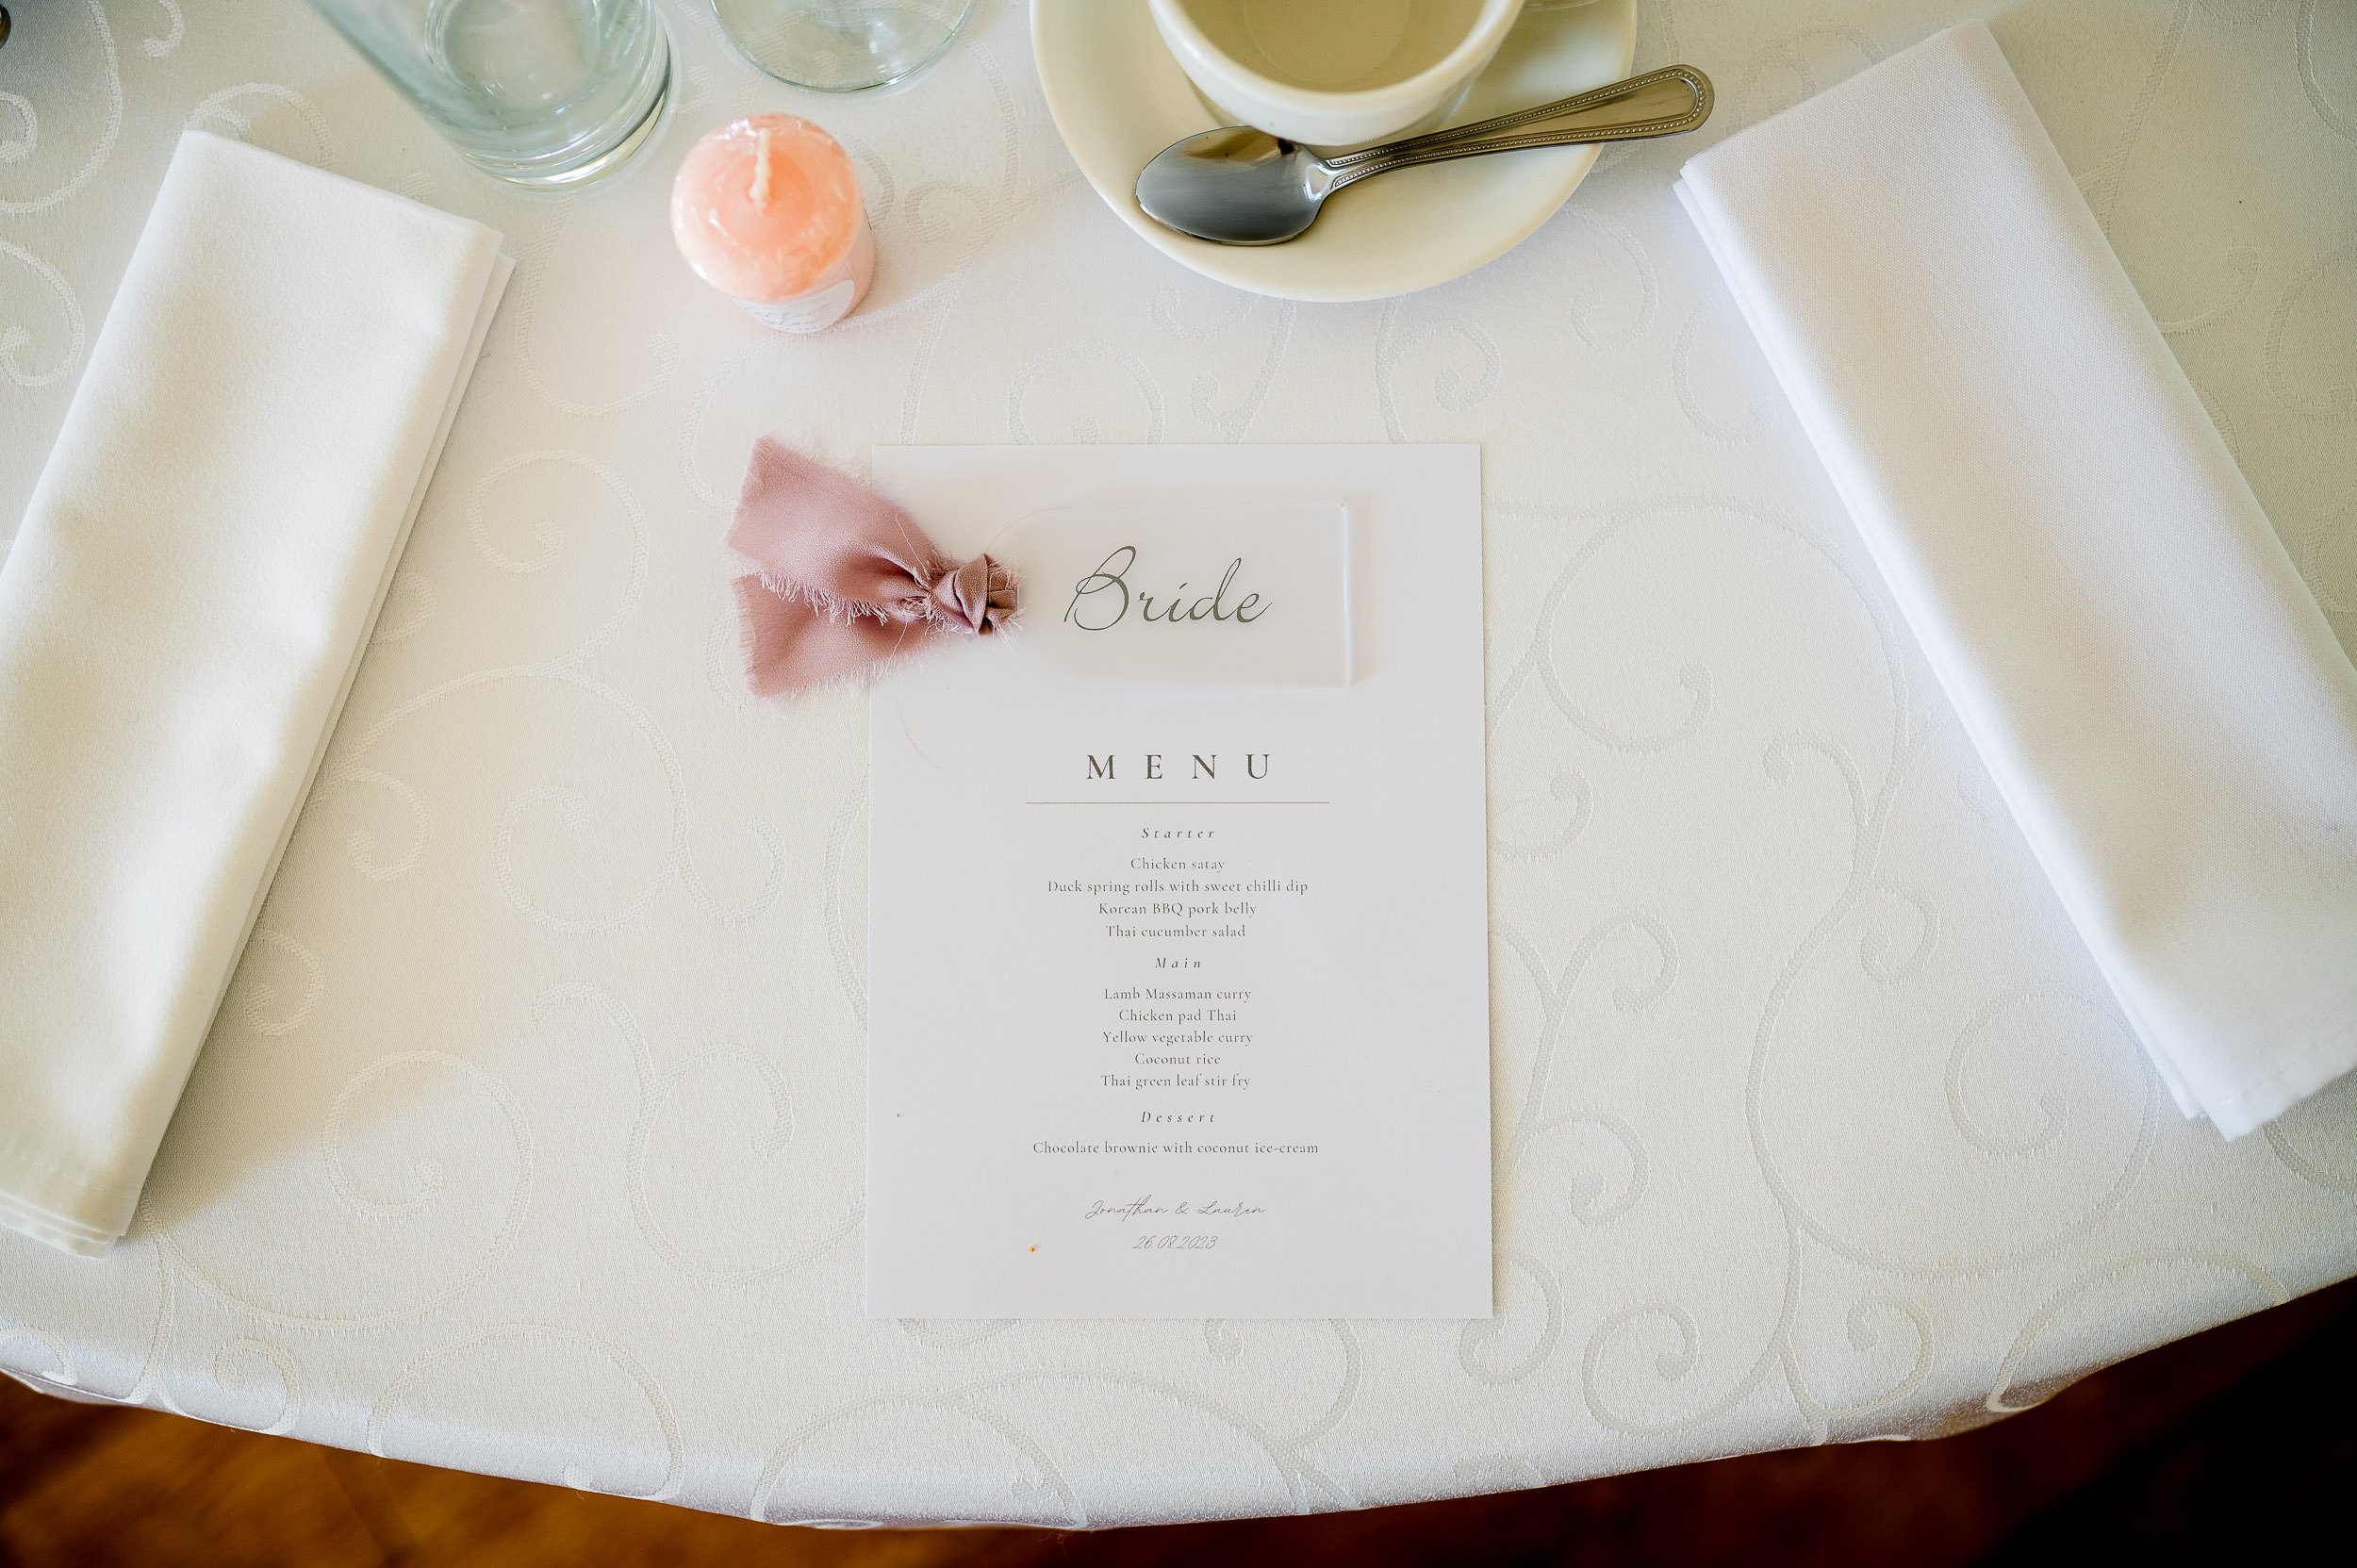 Brides menu at Hethfelton House wedding